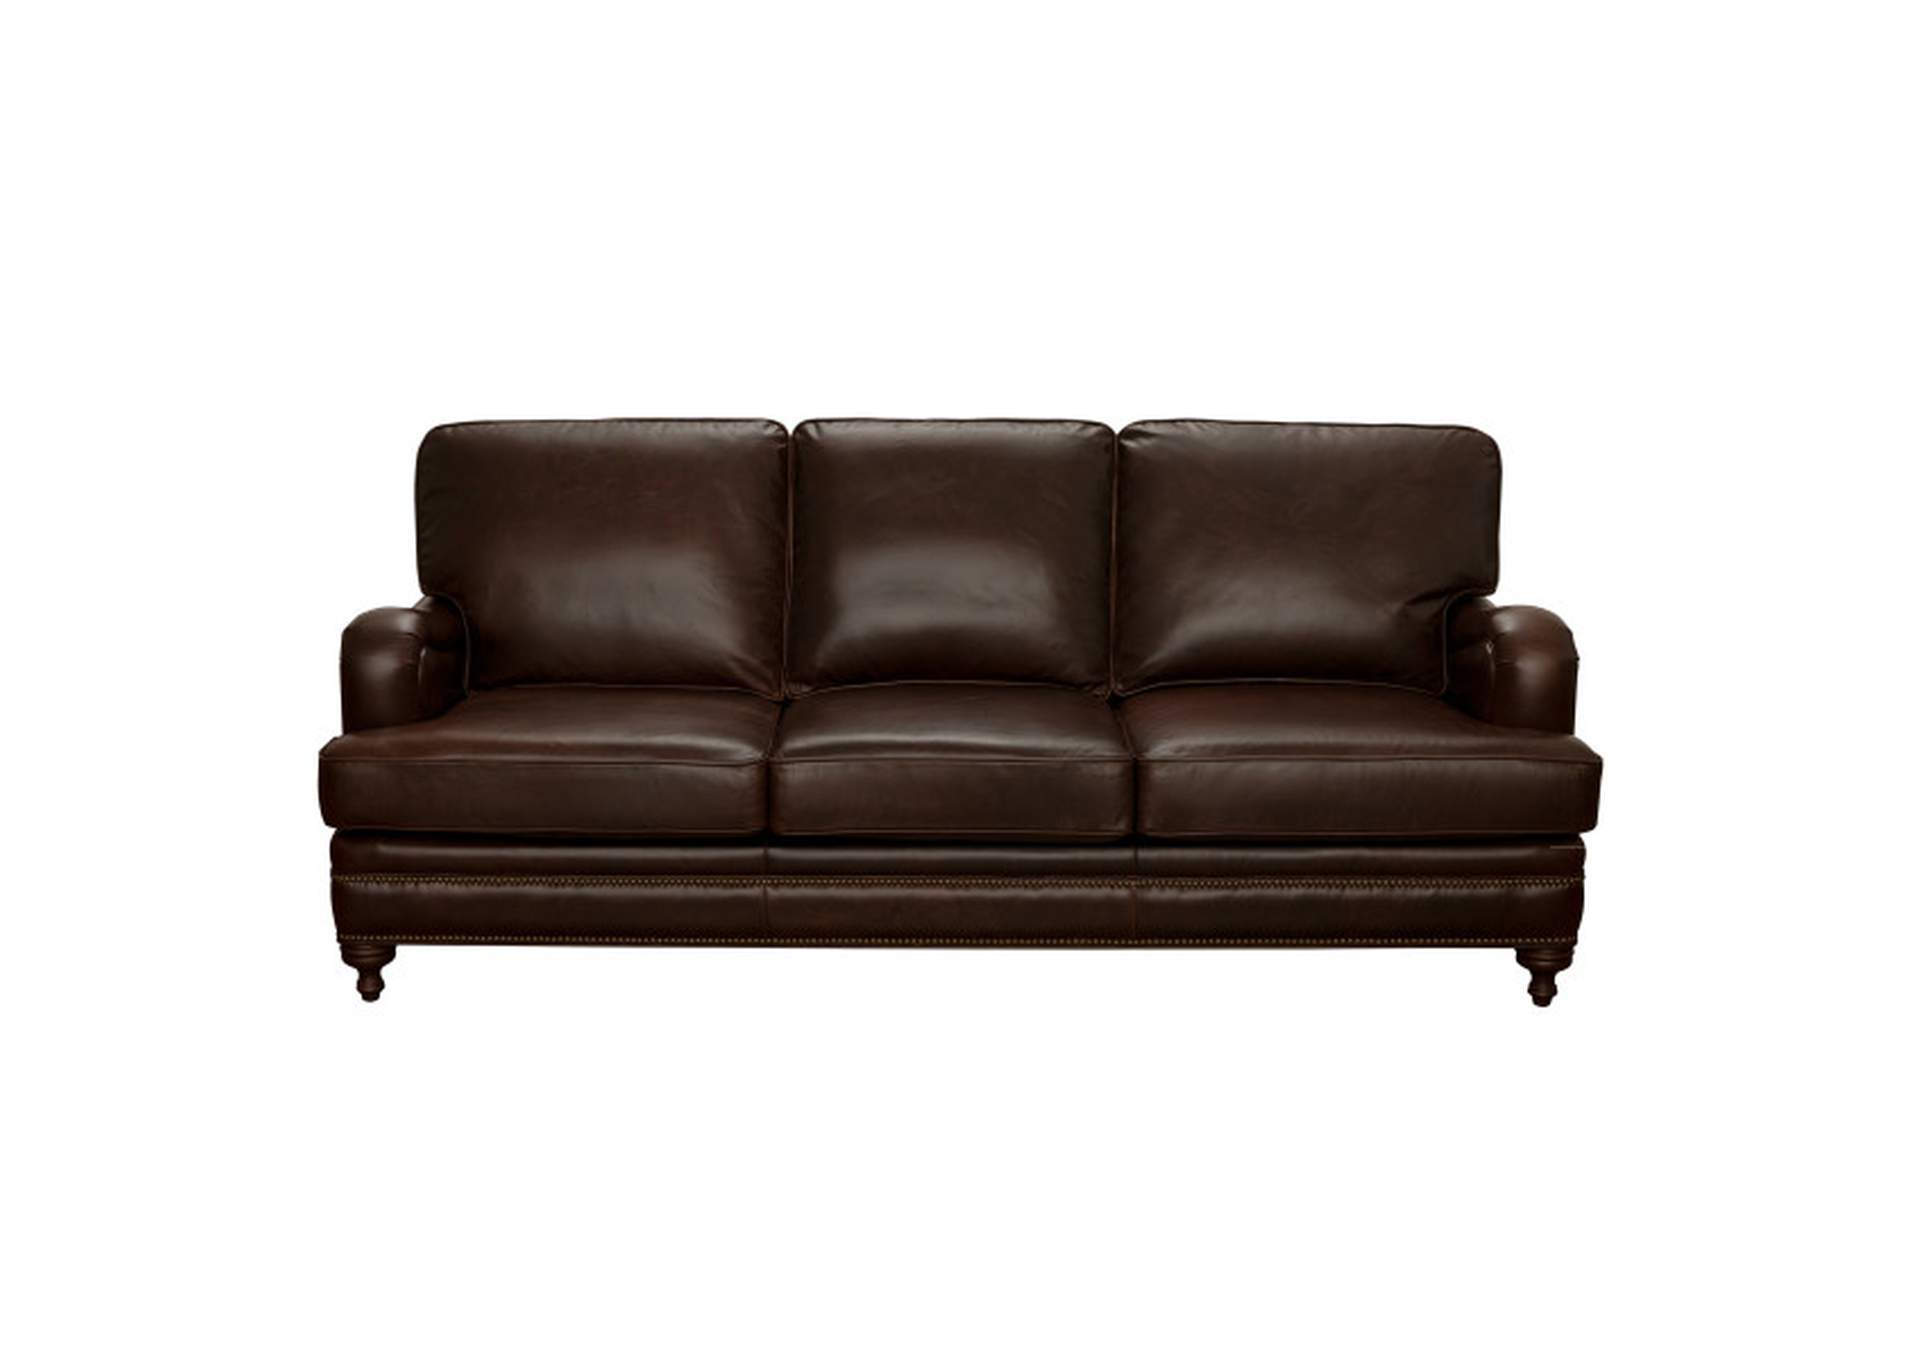 Oliver Espresso Leather Sofa Set W/ Sofa, Armchair & Loveseat,Pulaski Furniture